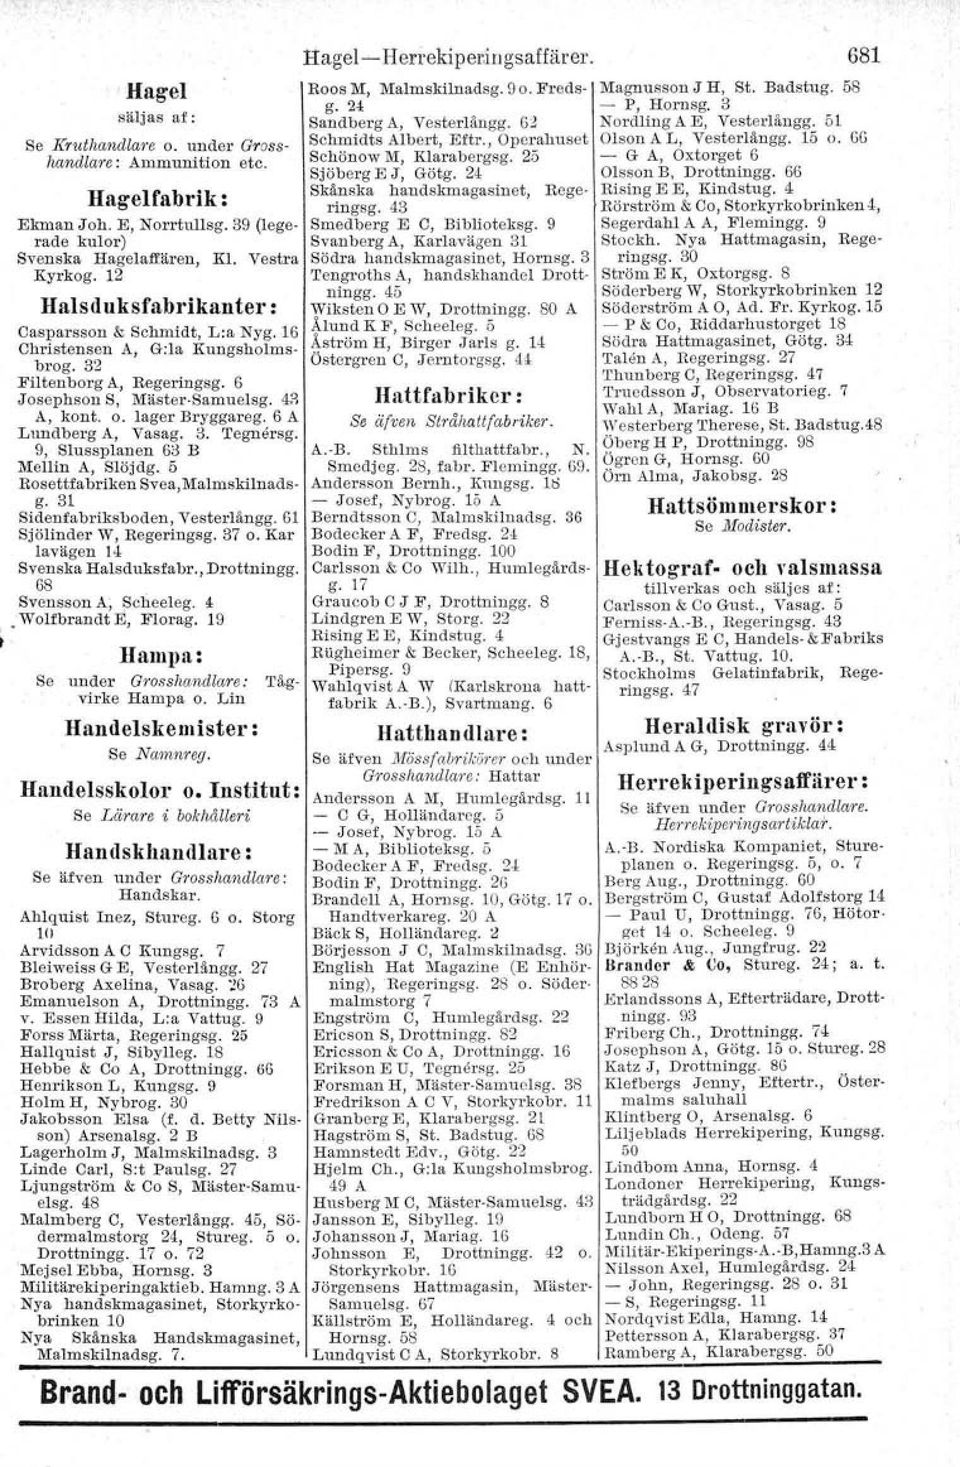 80 A Casparsson & Schmidt, Lia Nyg. 16 Ålund K F, Scheeleg. 5 Christensen A, G:la Kungsholmsbrog. 32 Östergren C, Jerntorgsg. 44 Åström H, Birger.Tarls g. 14 Filtenborg A, Begeringsg.